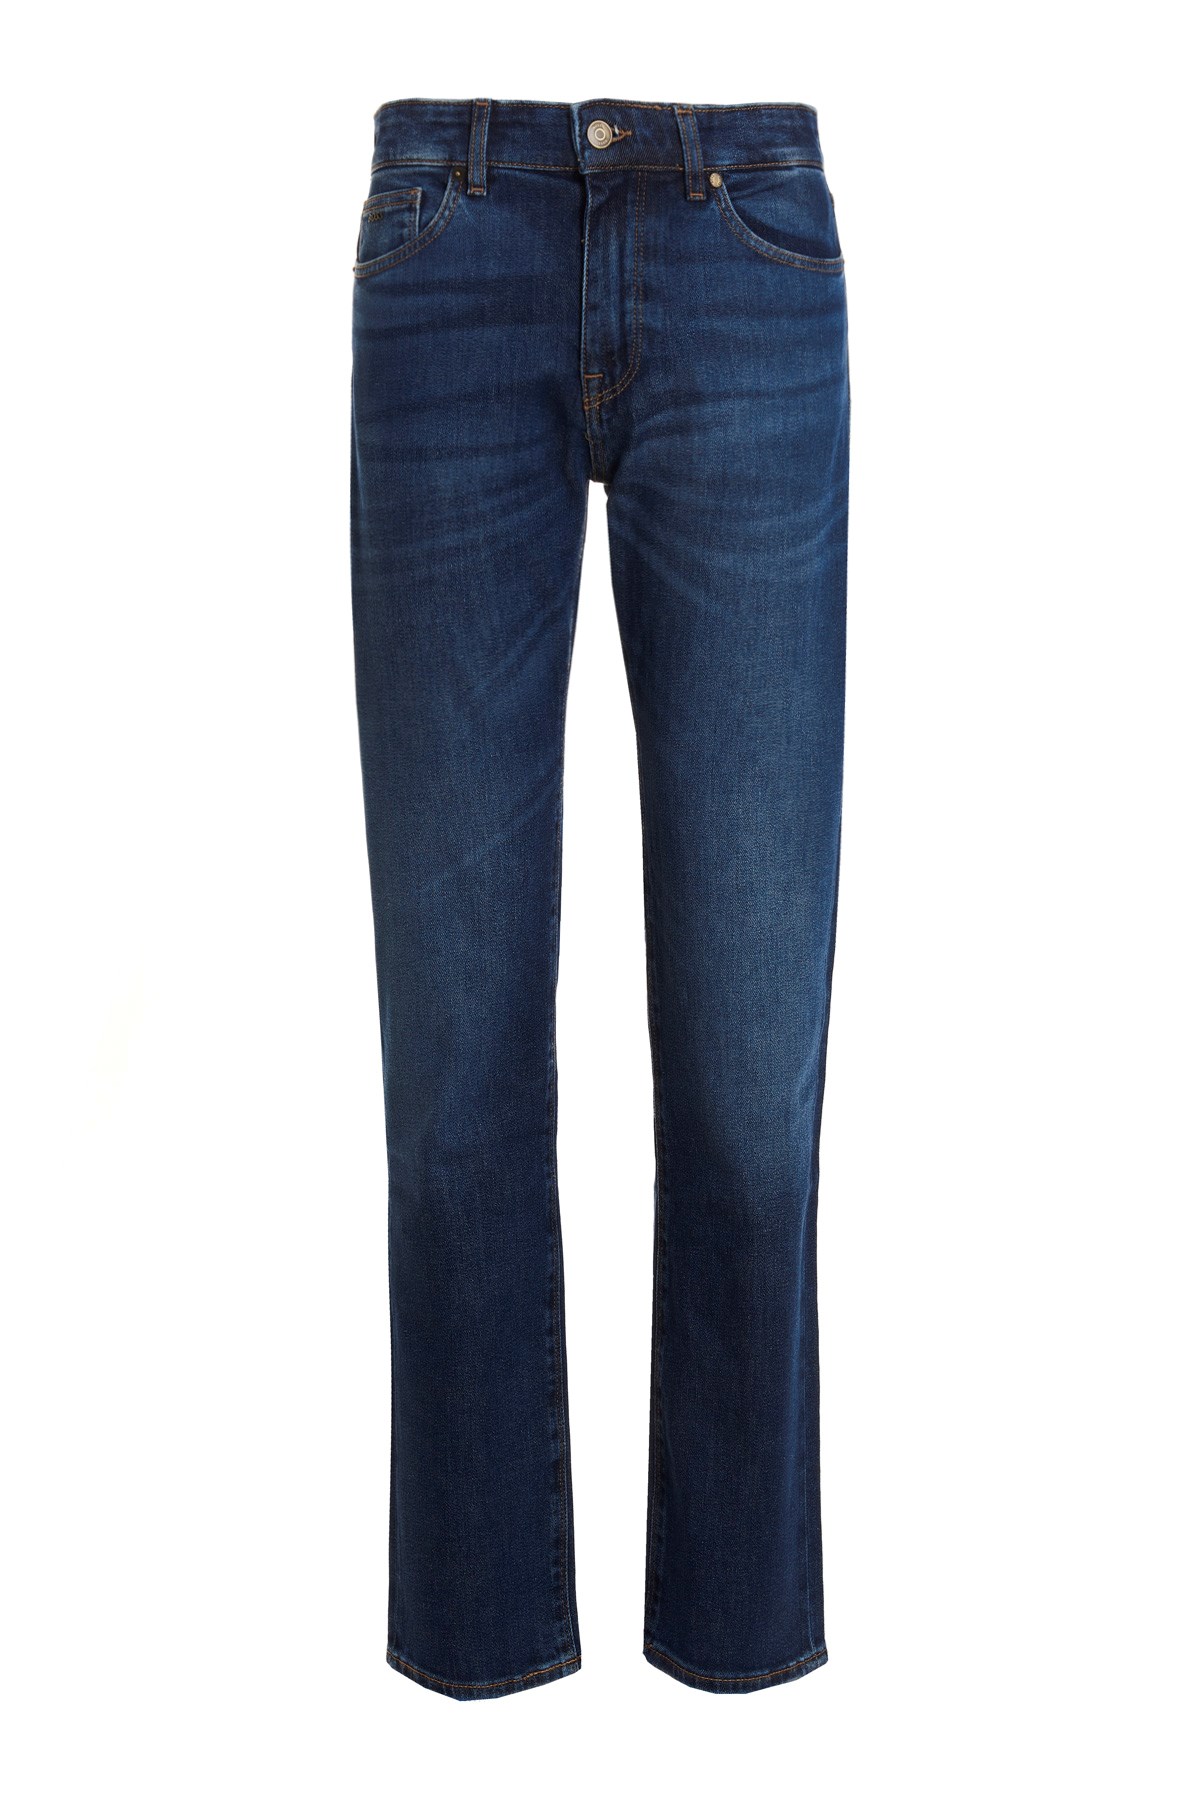 HUGO BOSS 'Maine 3' Jeans